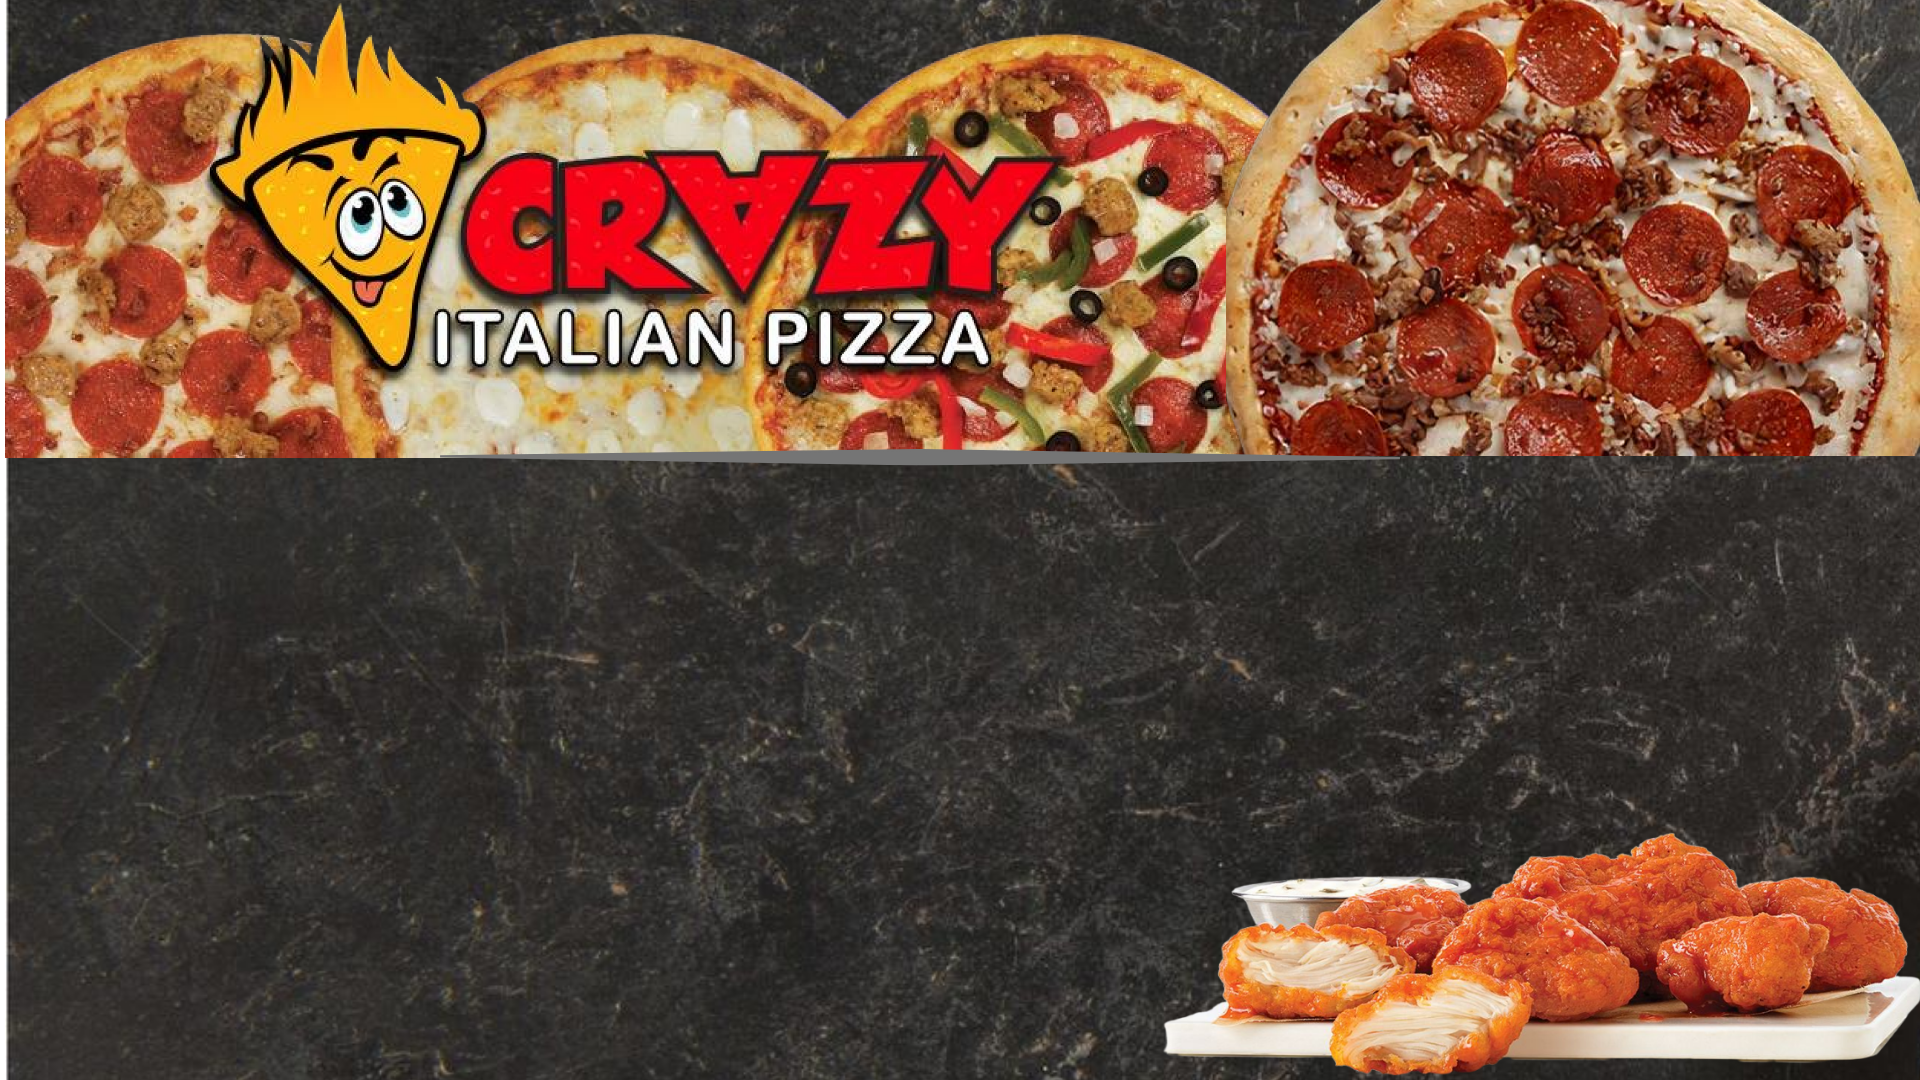 WINGS  Crazy Italian Pizza, Inc